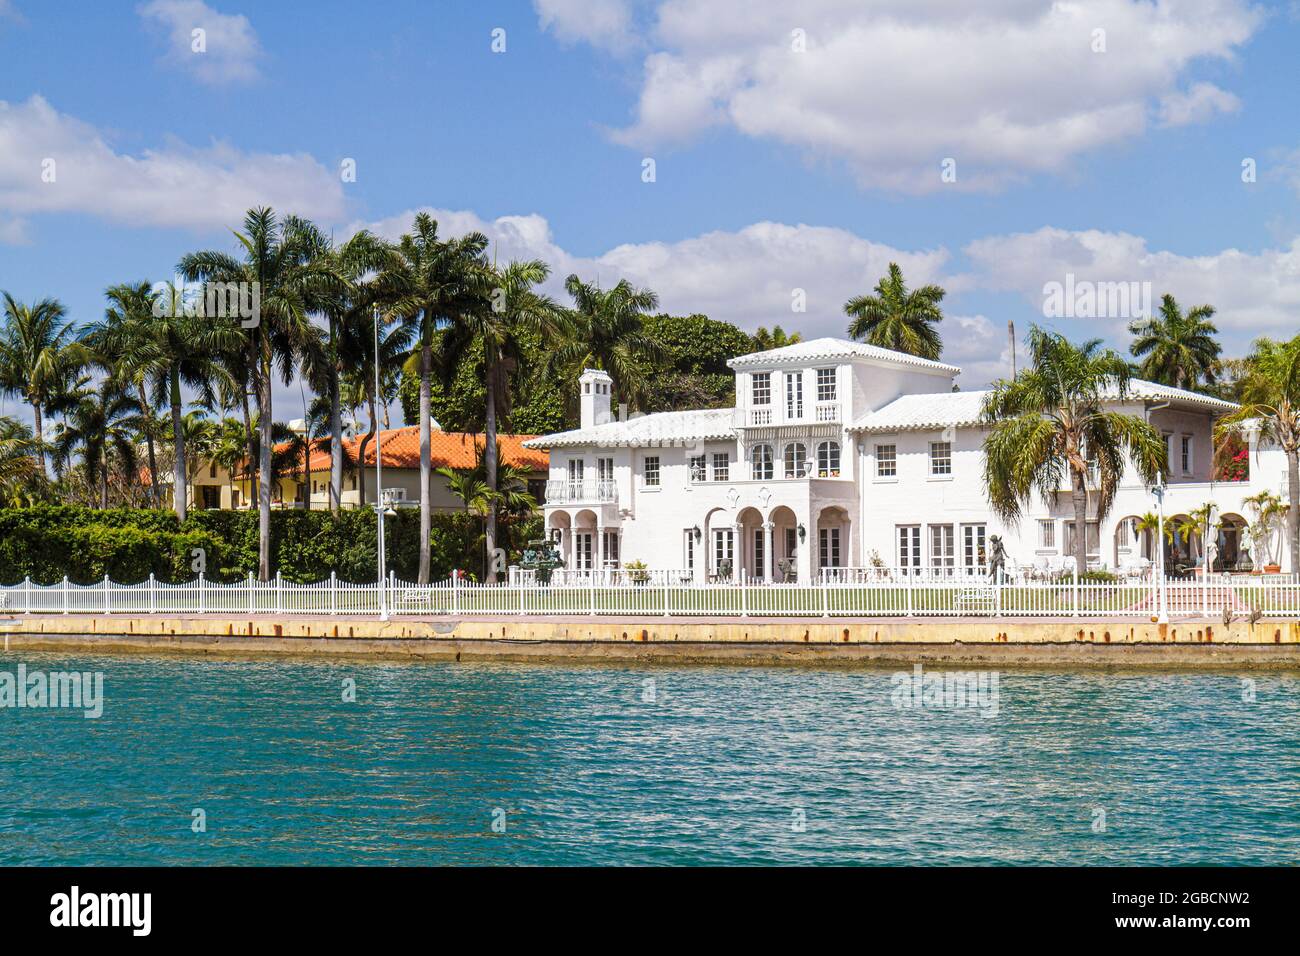 Miami Beach Florida, Biscayne Bay Star Island, 42 Star Island Drive Waterfront home, Mansion Scarface film set posizione al Pacino, Foto Stock